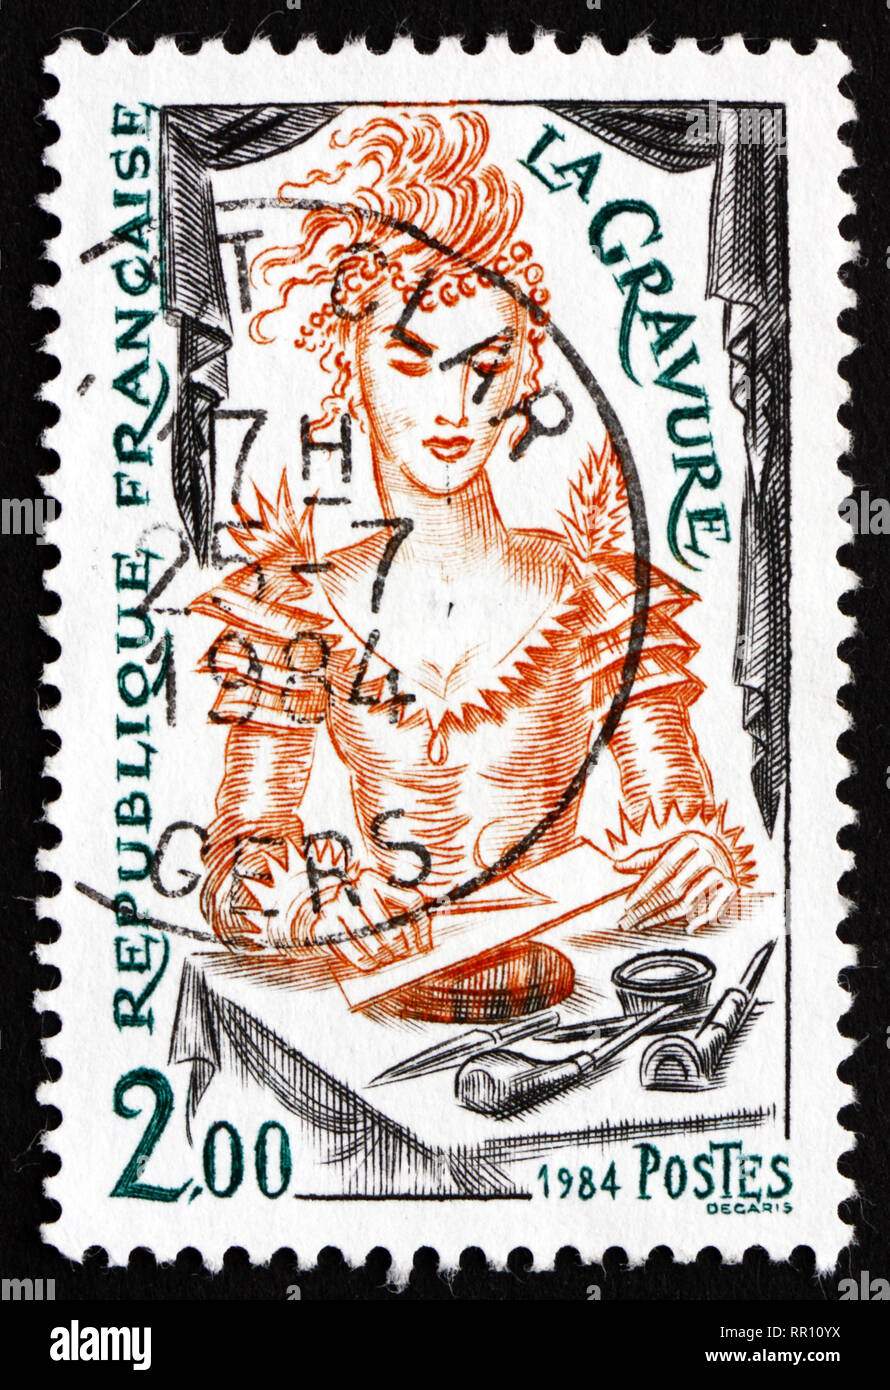 FRANCE - circa 1984 : timbre imprimé en France montre la gravure, circa 1984 Banque D'Images